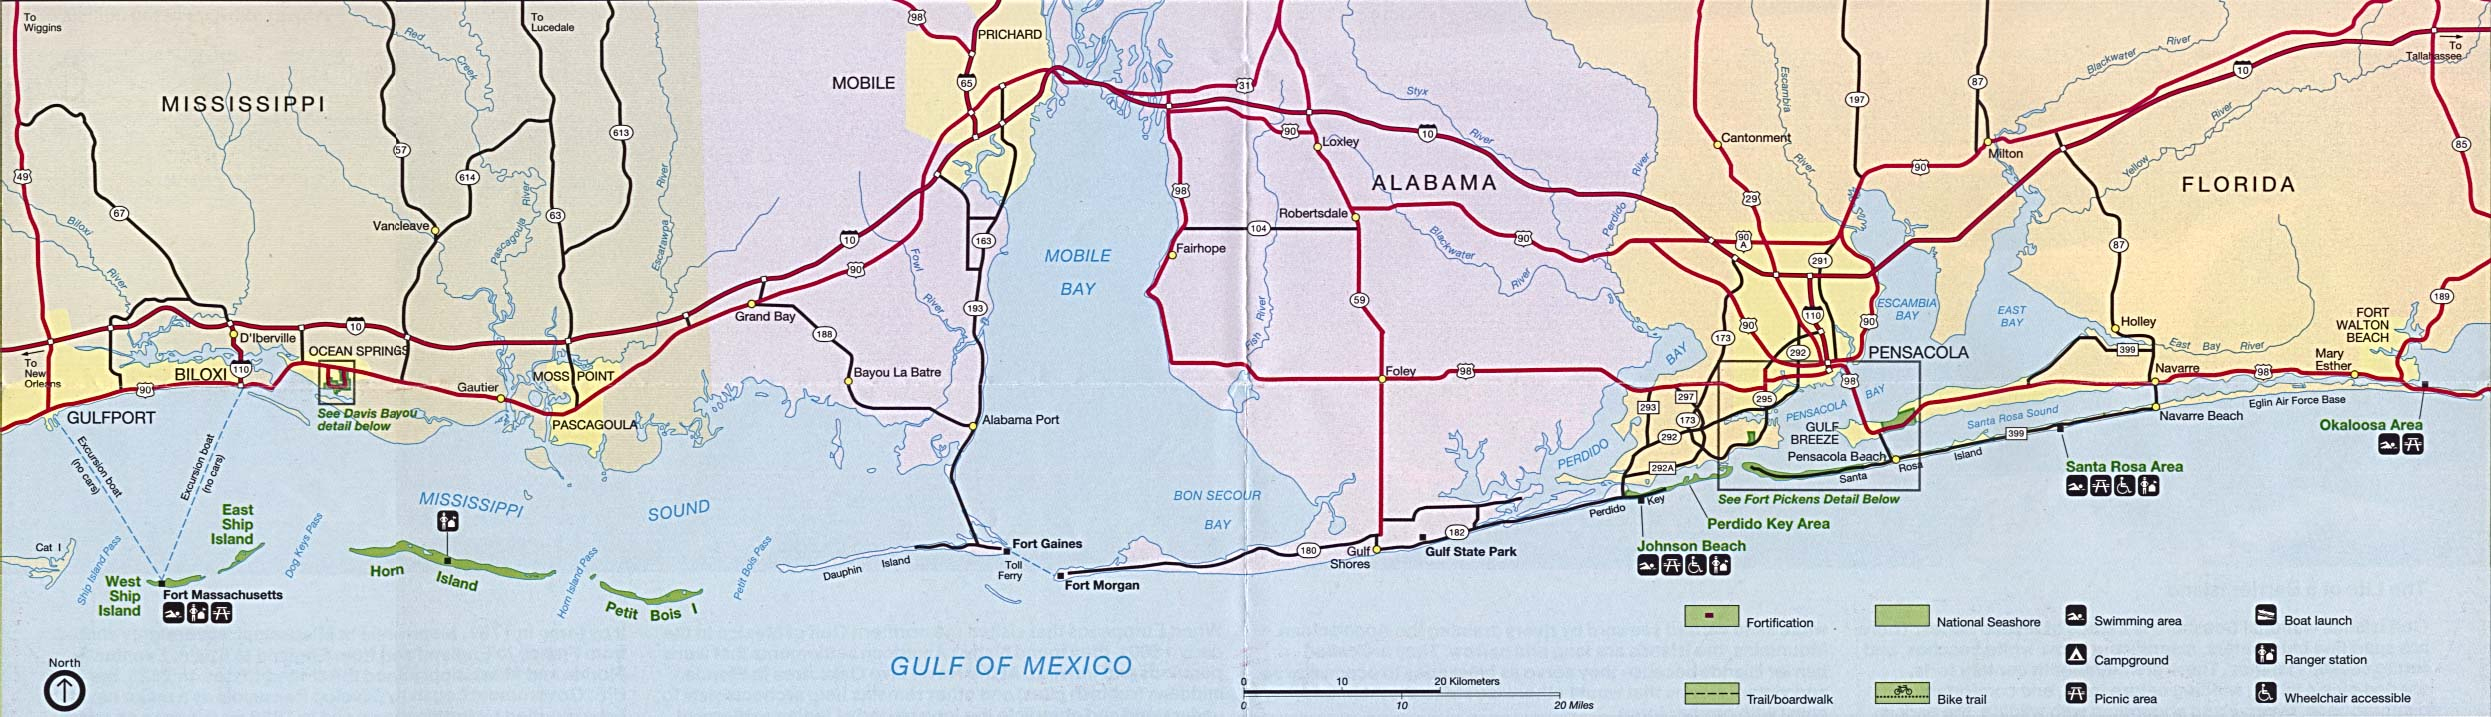 Alabama Maps - Perry-Castañeda Map Collection - Ut Library Online - Alabama Florida Coast Map